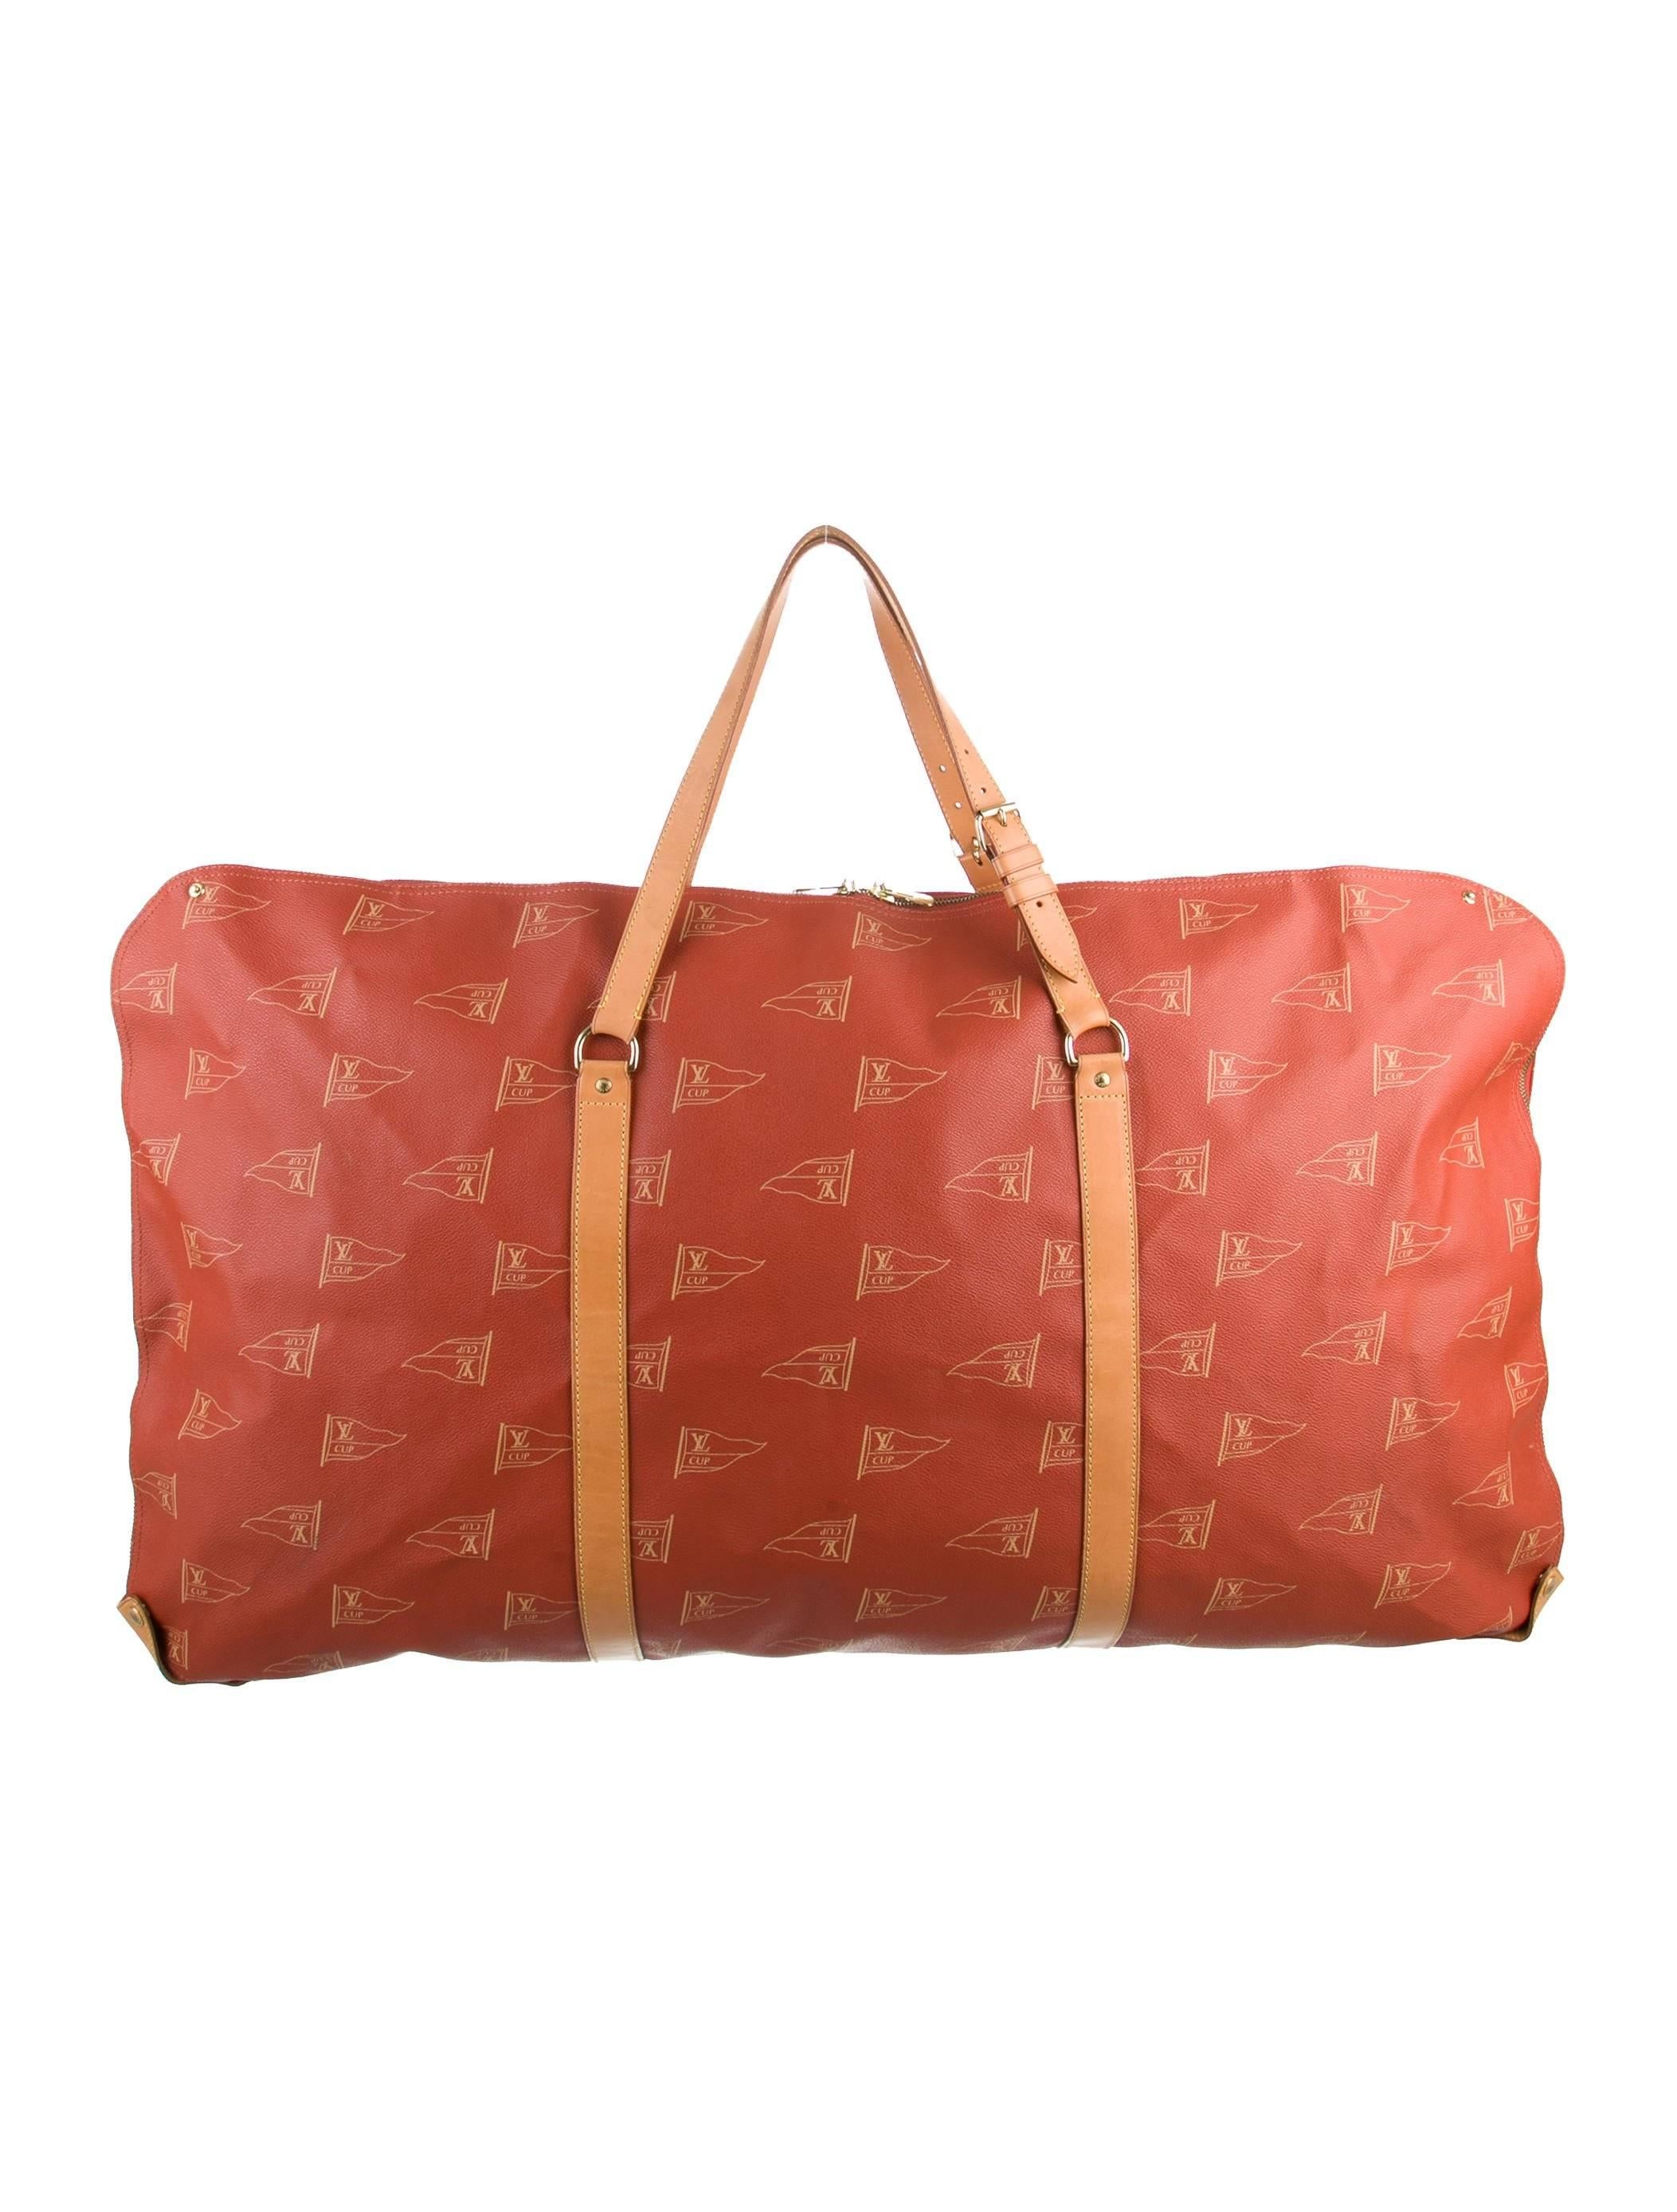 Orange Louis Vuitton Limited Edition Top Handle Men's Travel Weekender Duffle Tote Bag